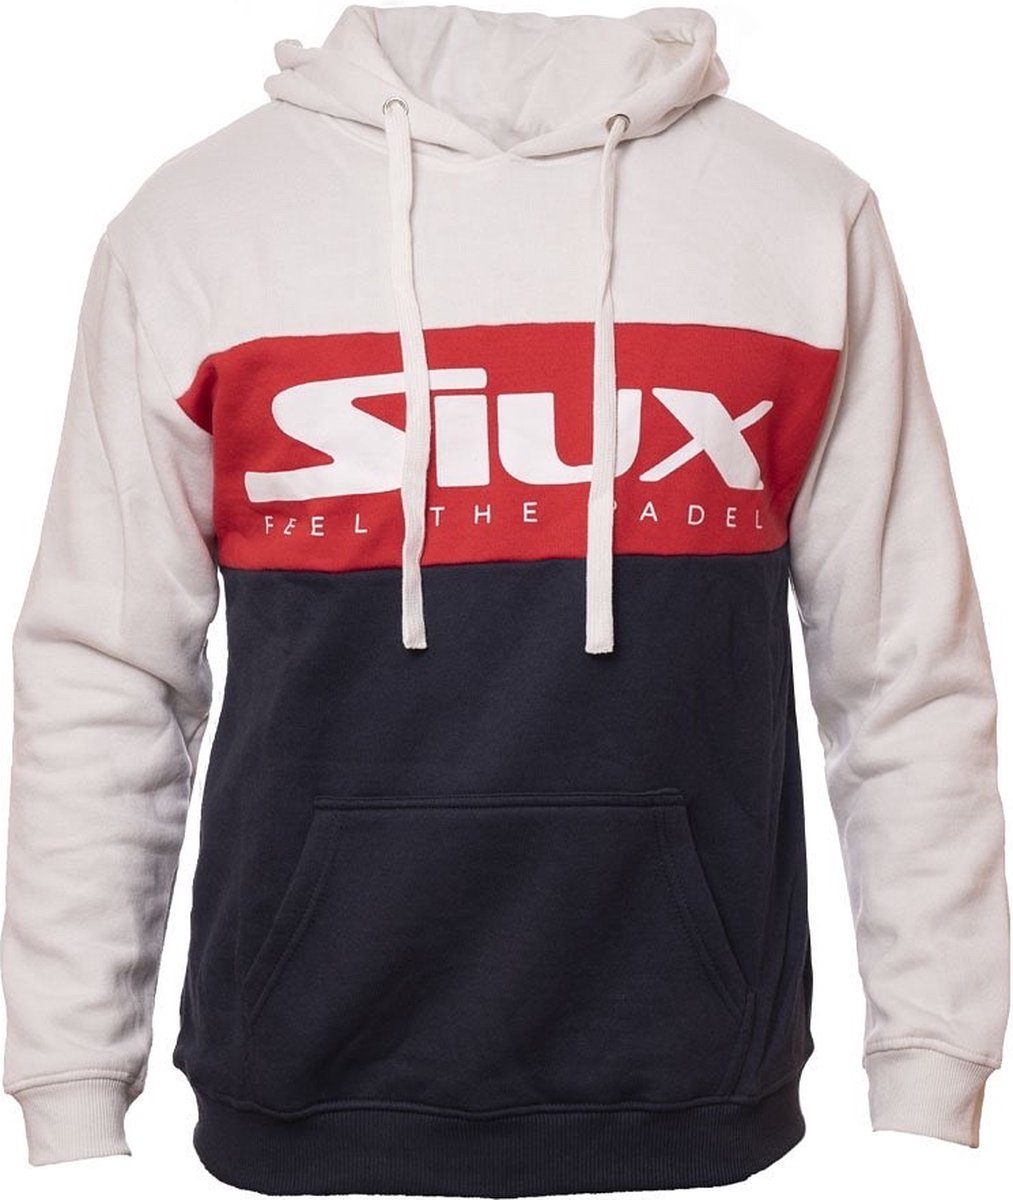 Siux sweater / hoody XL